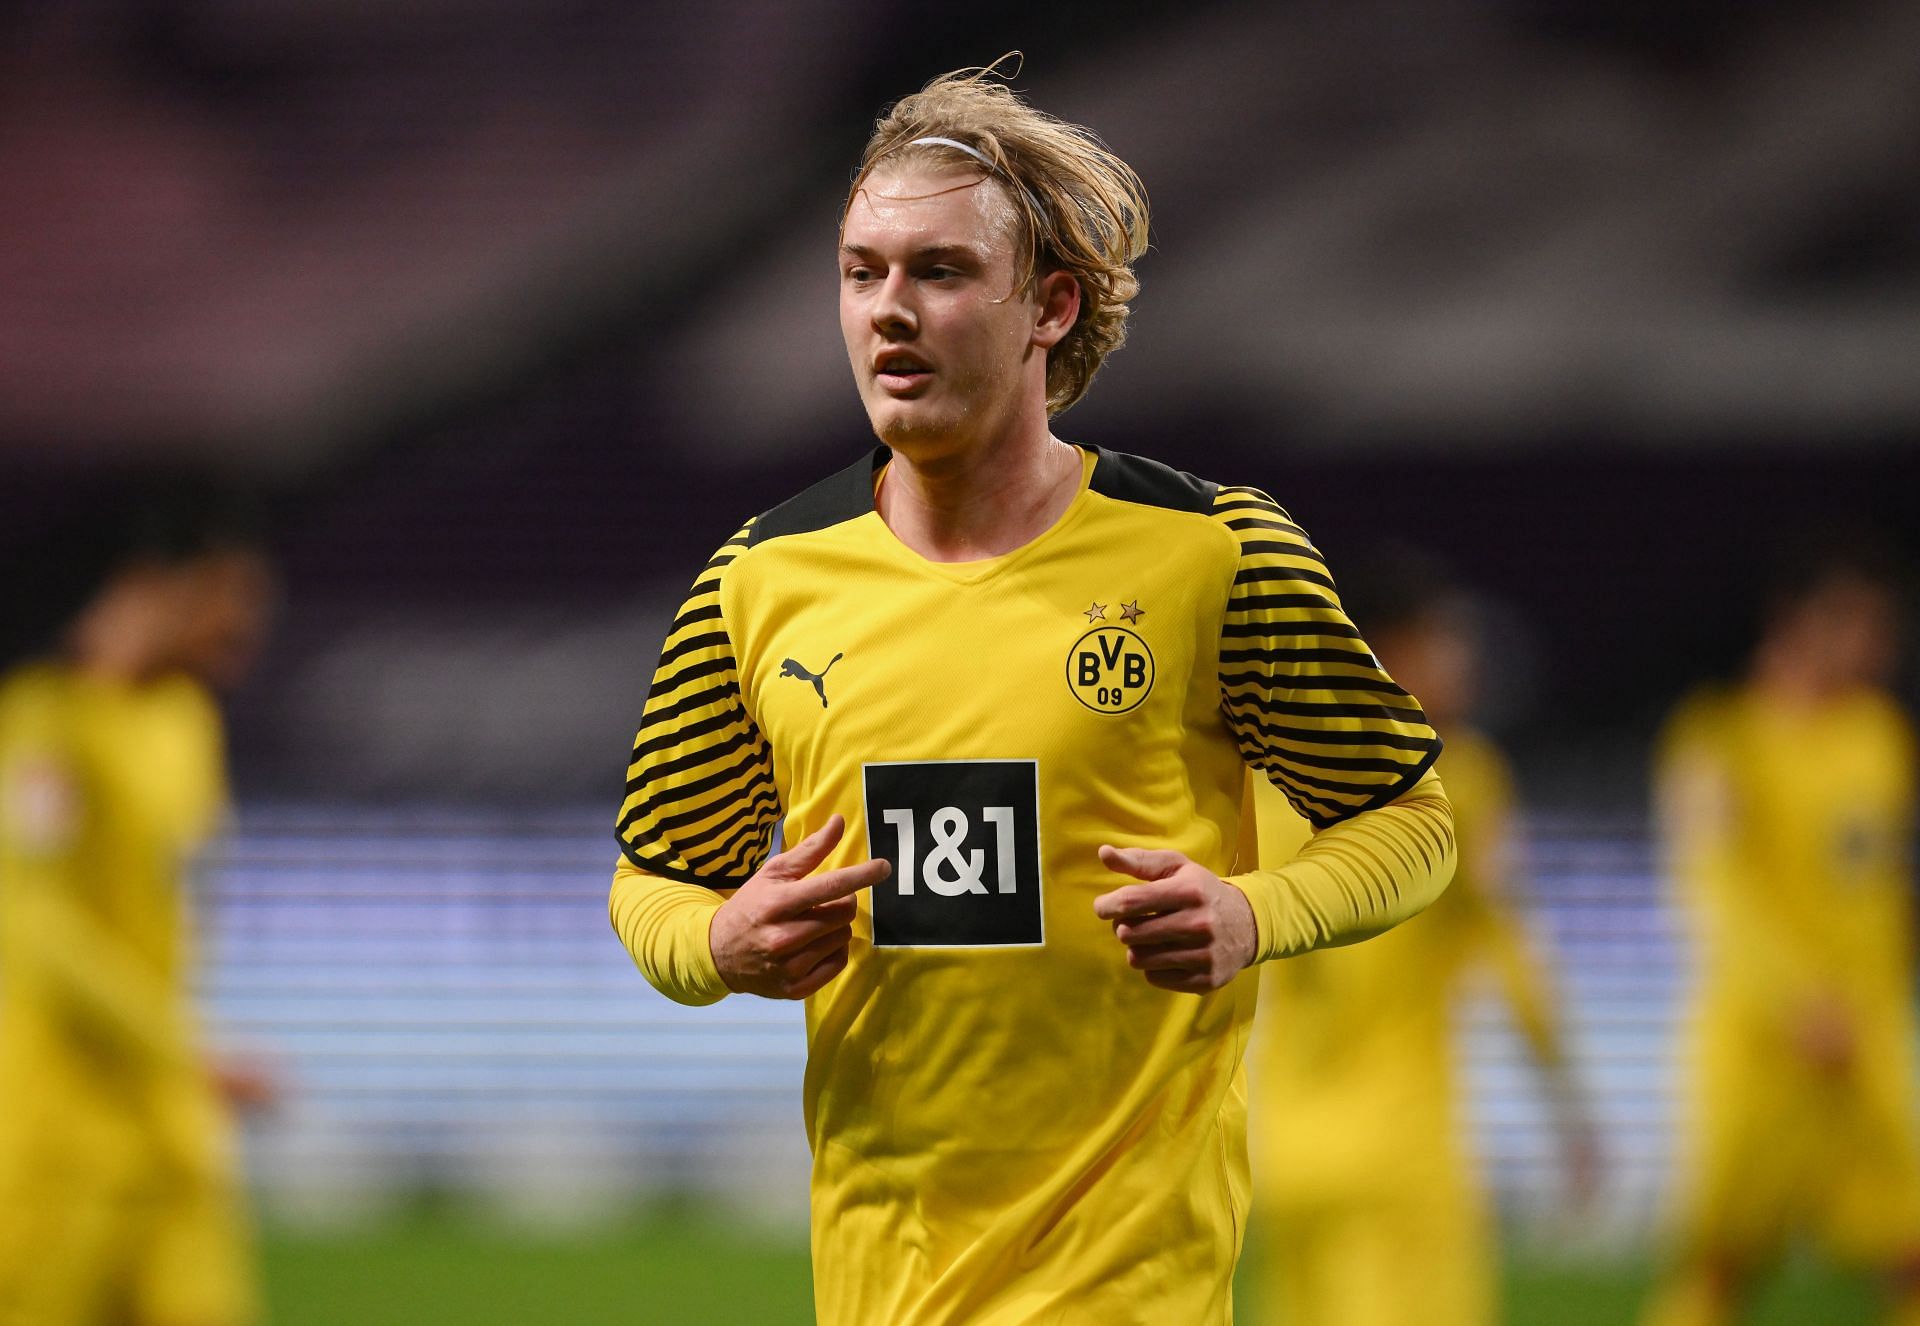 Borussia Dortmund play Freiburg on Friday